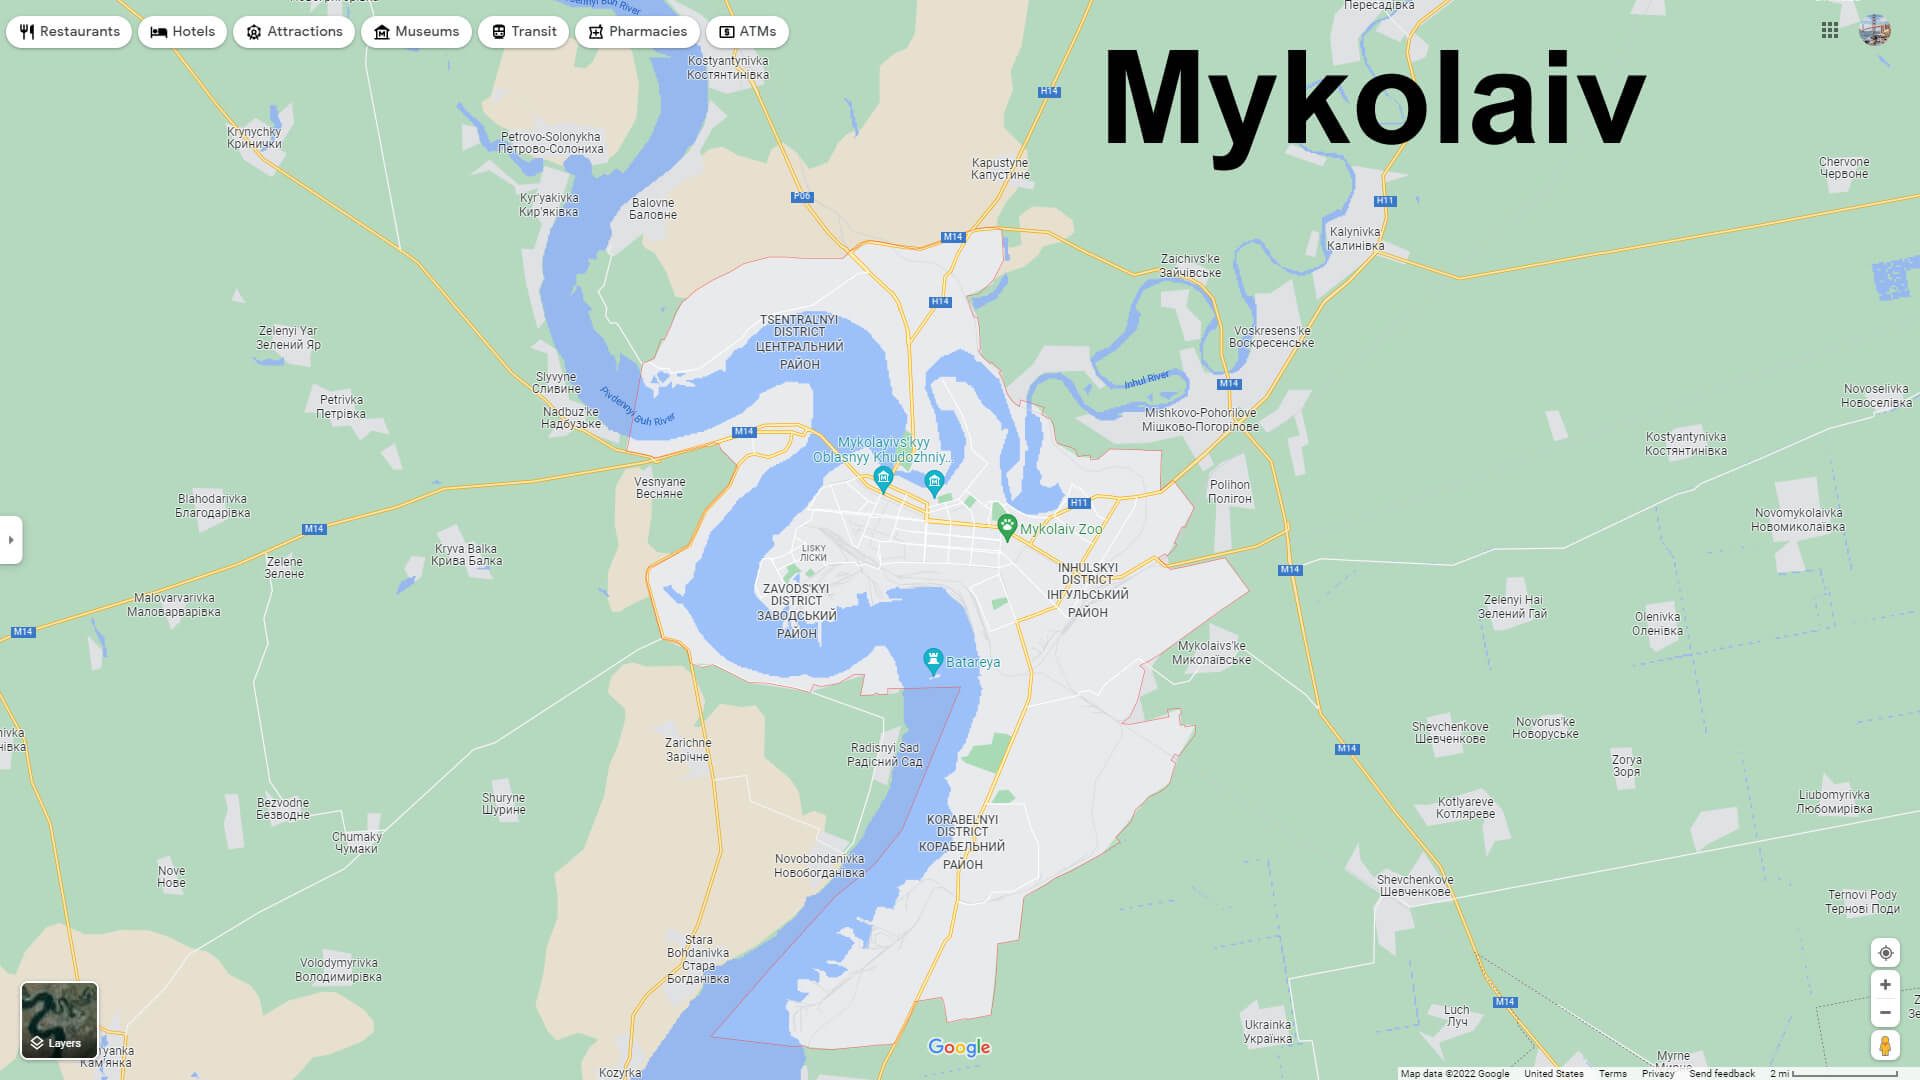 Mykolaiv City Center Map